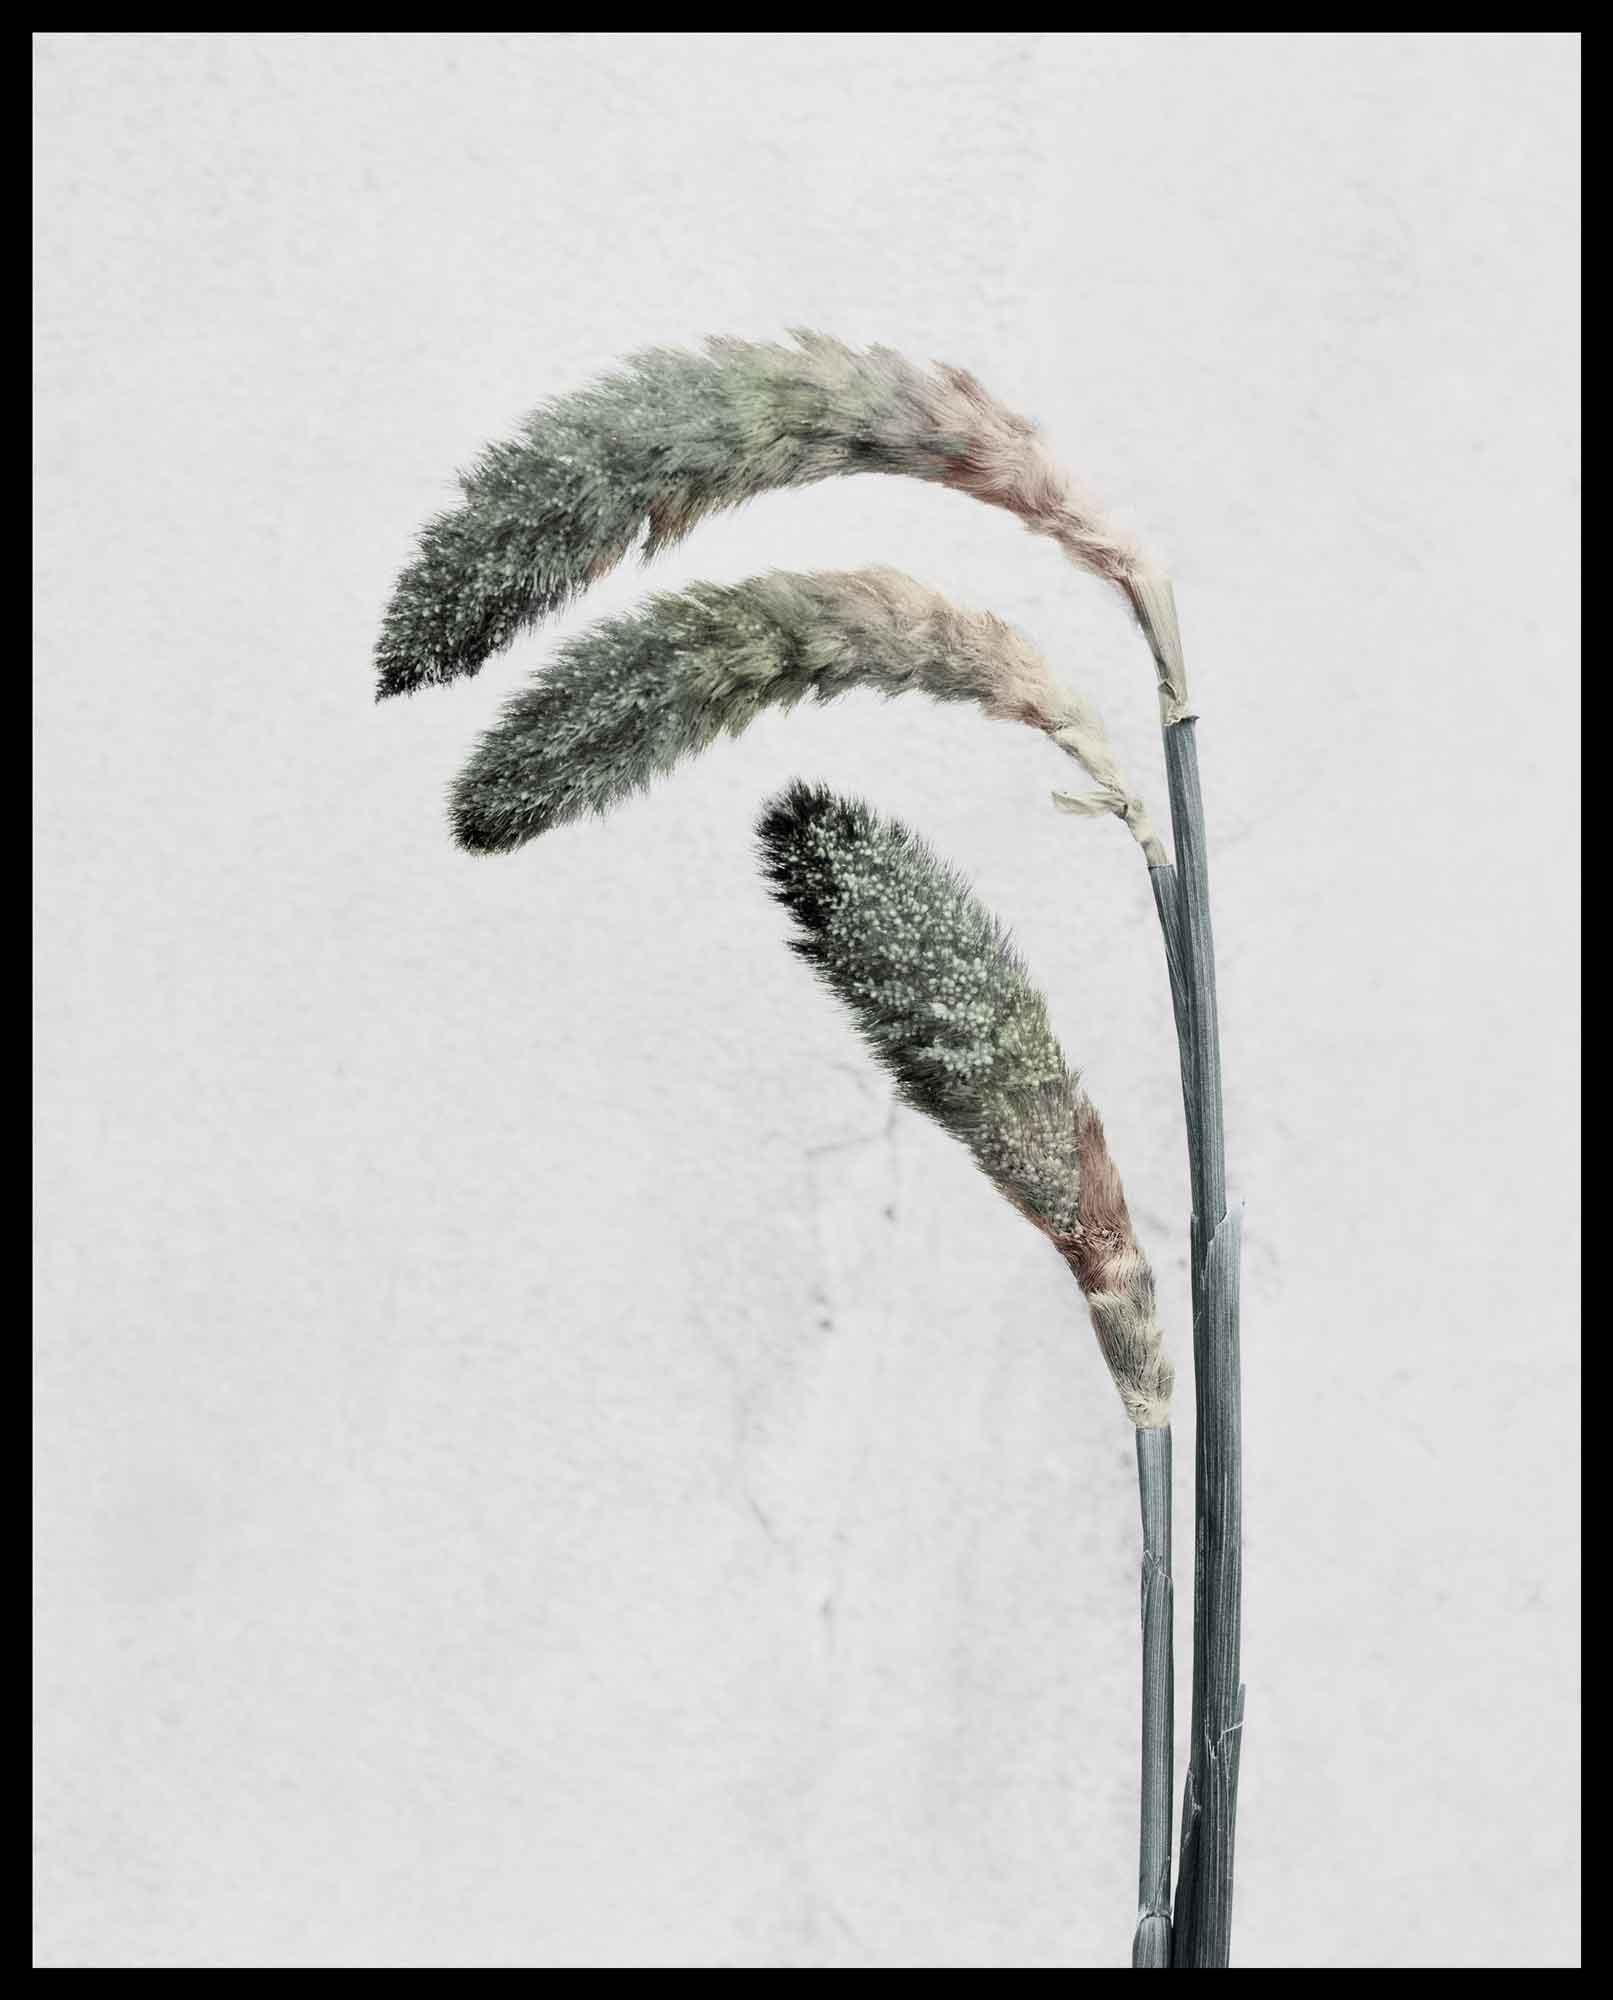 Botanica #22 (Pennisetum) - Contemporary Photograph by Vee Speers